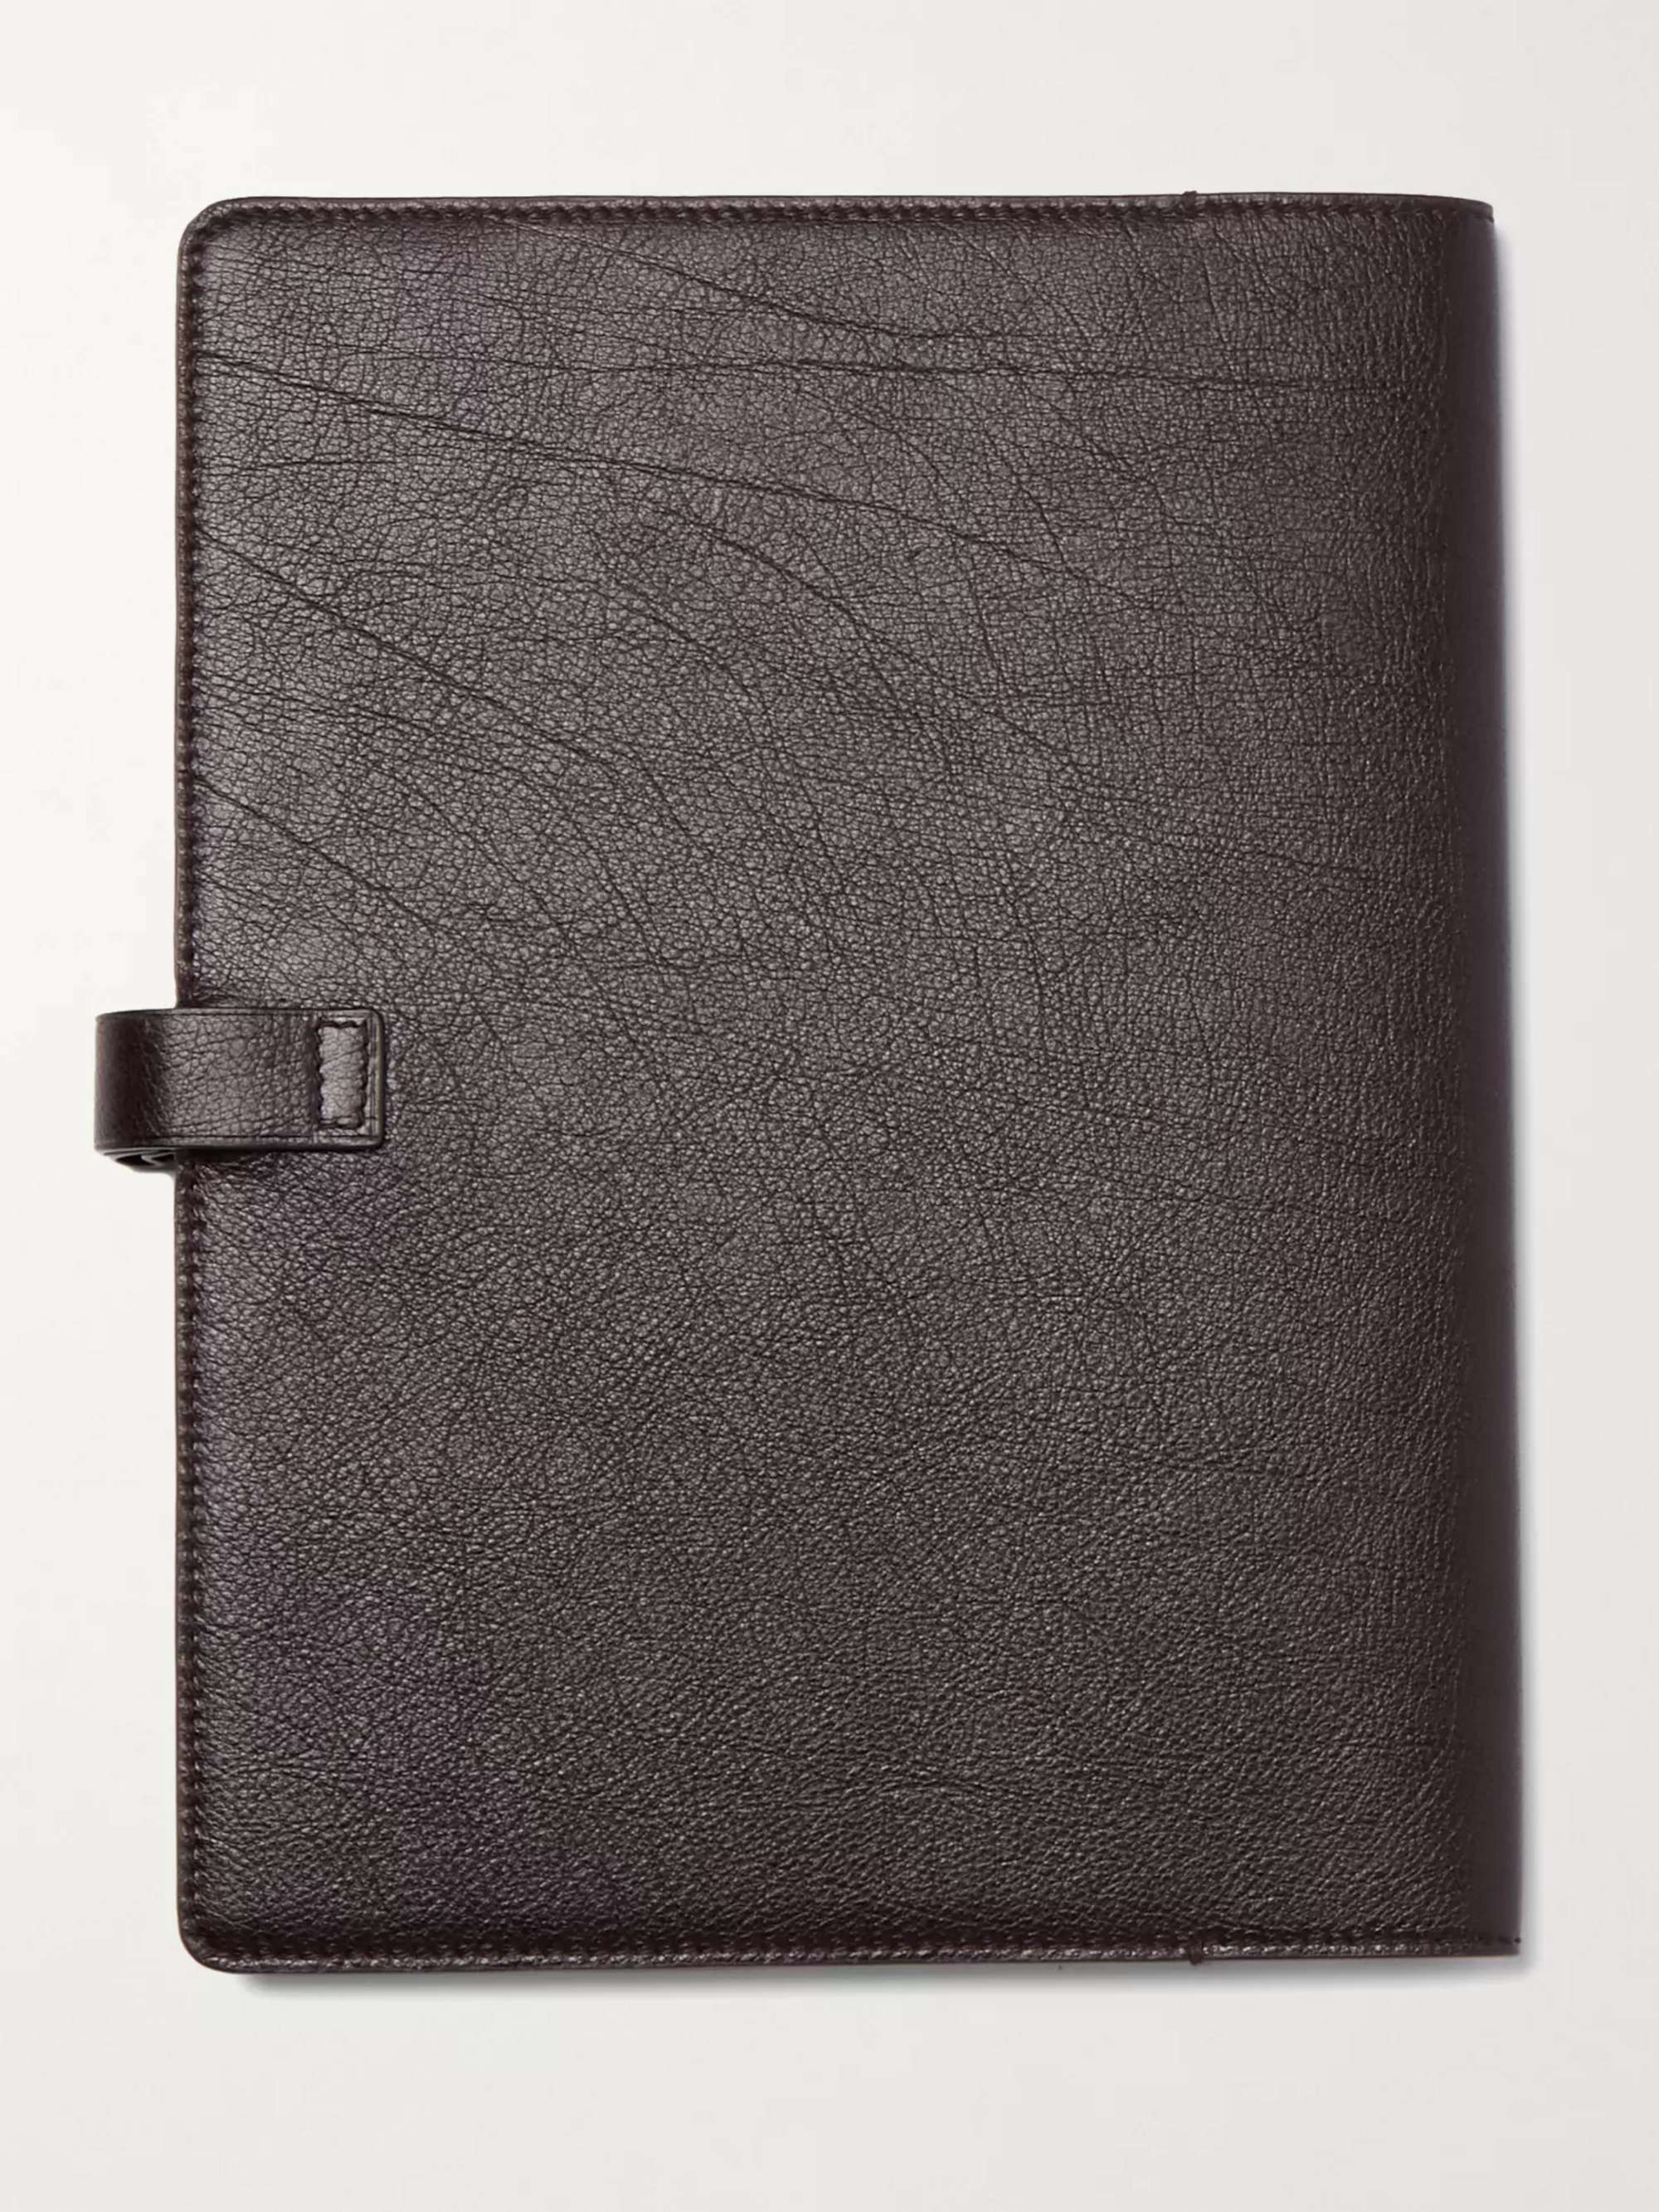 MÉTIER Full-Grain Leather Notebook